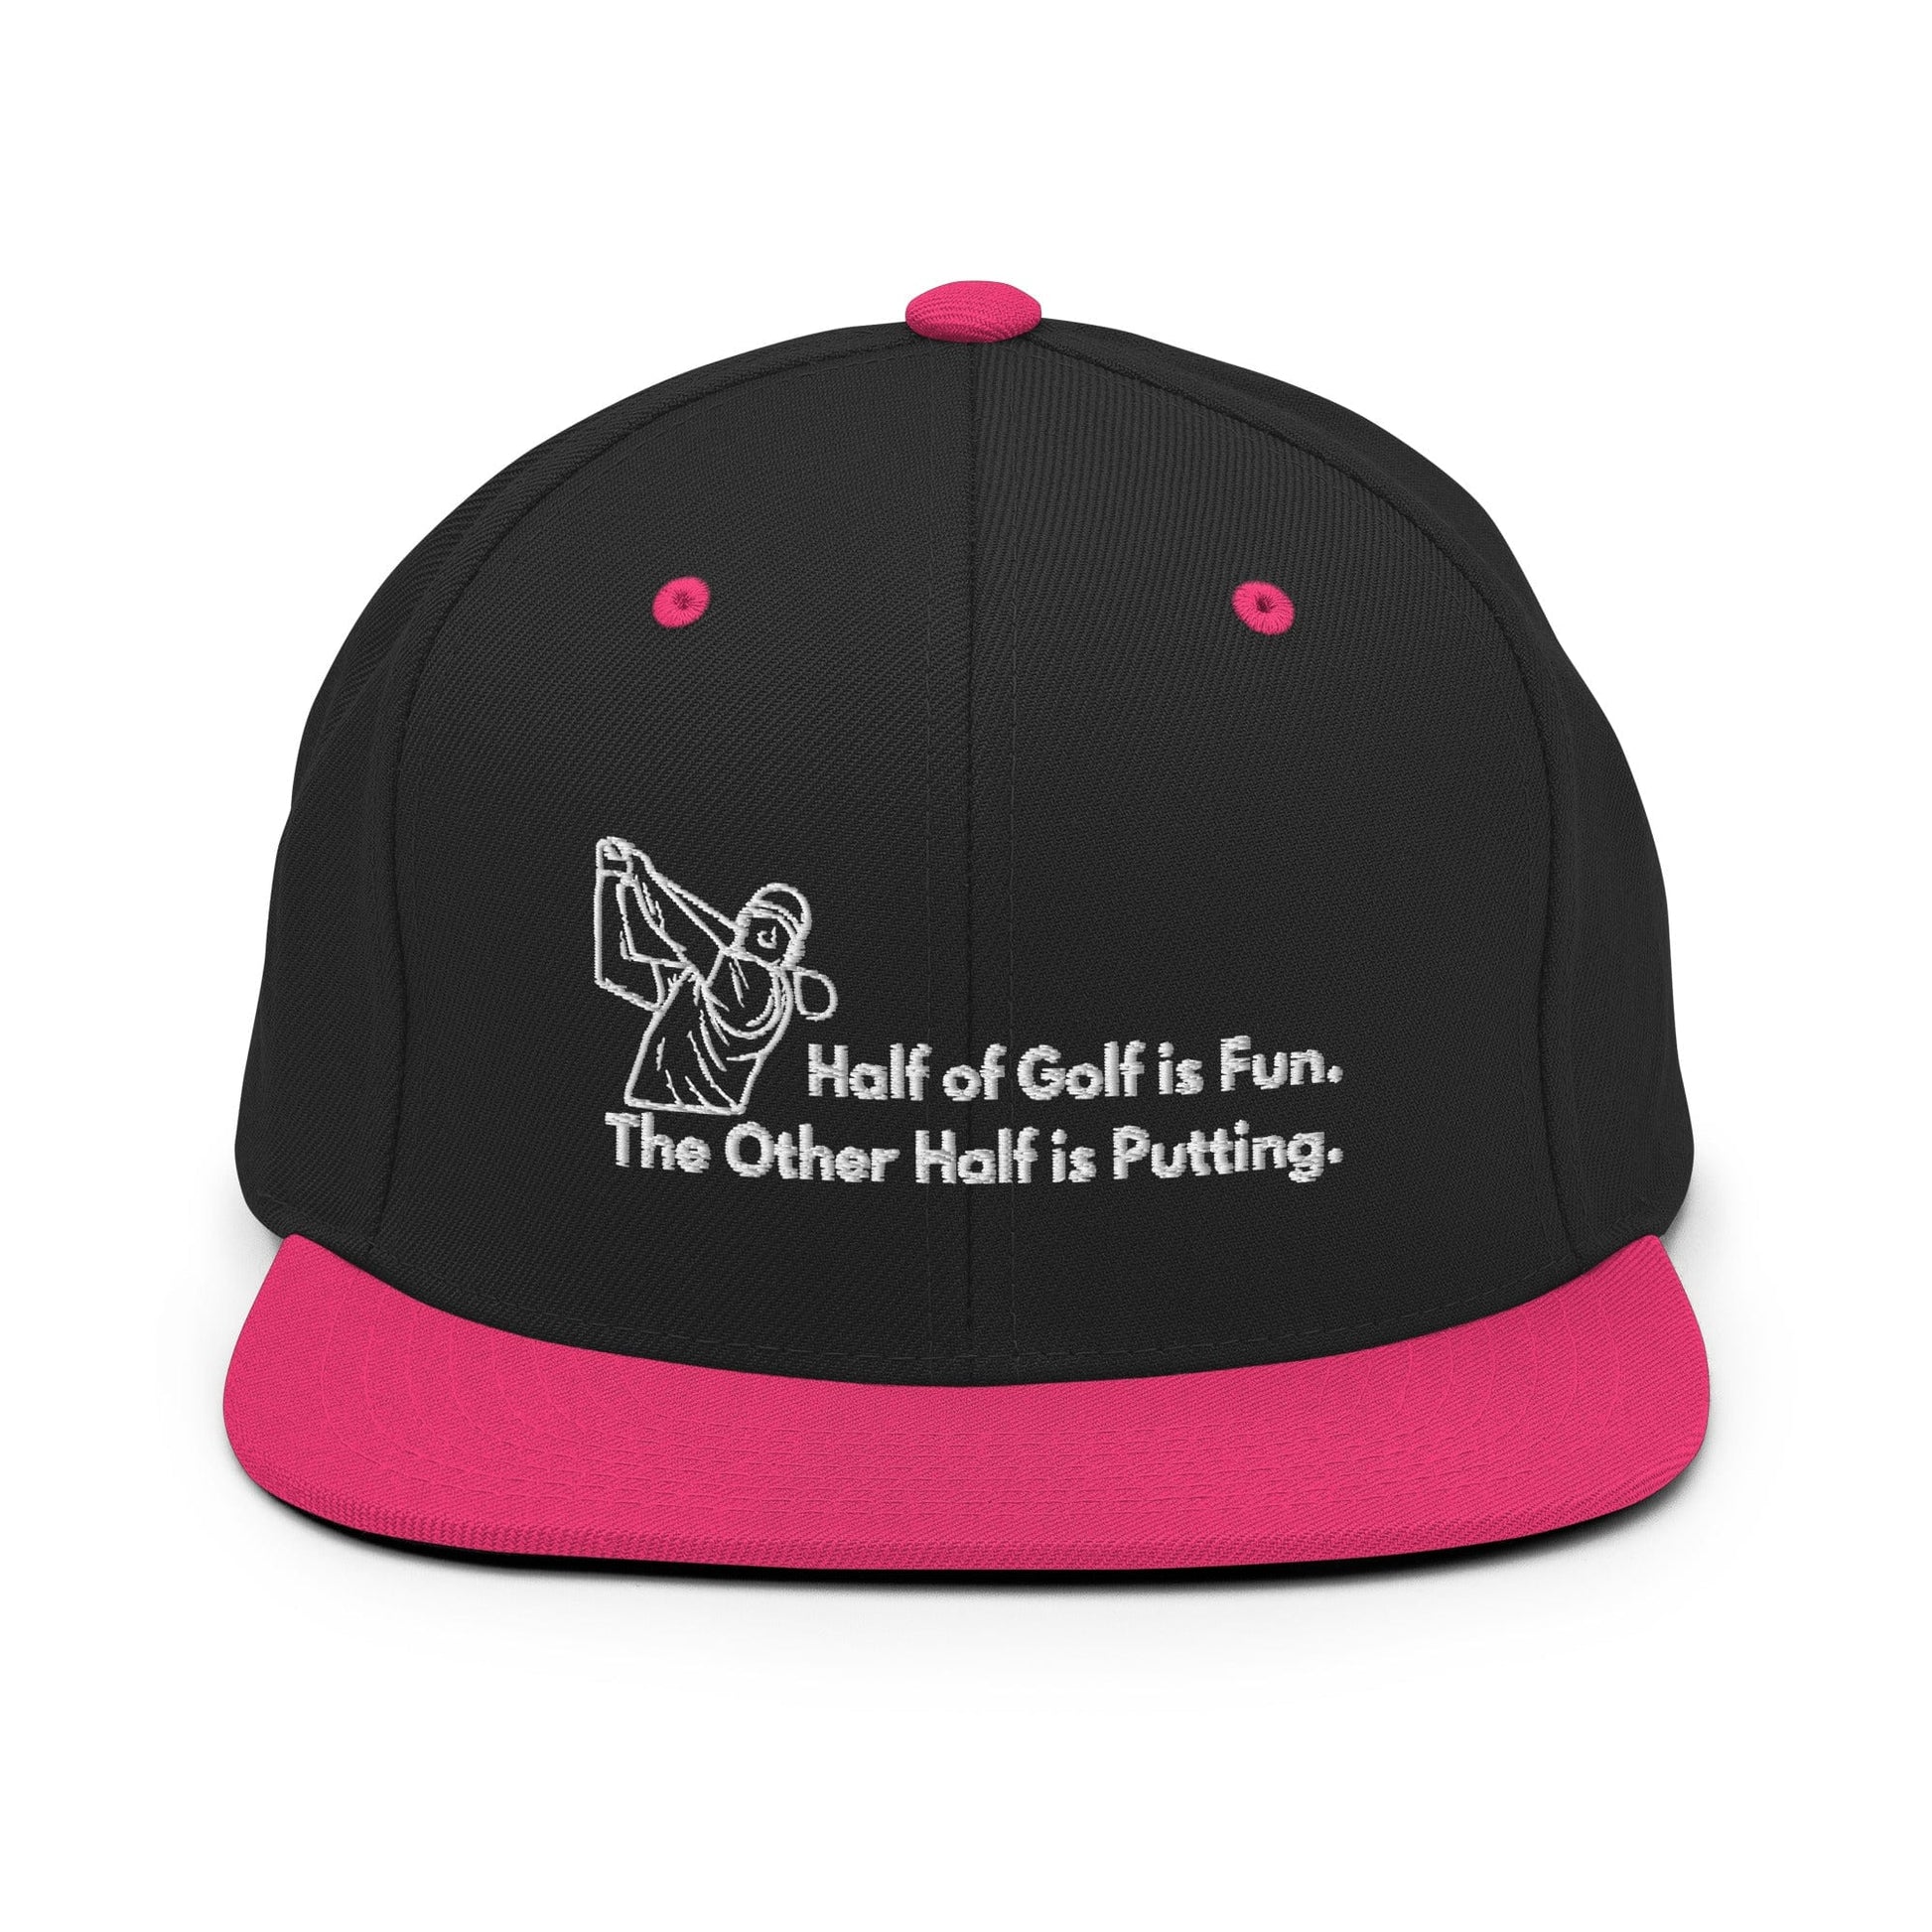 Funny Golfer Gifts  Snapback Hat Black/ Neon Pink Half of Golf is Fun Snapback Hat